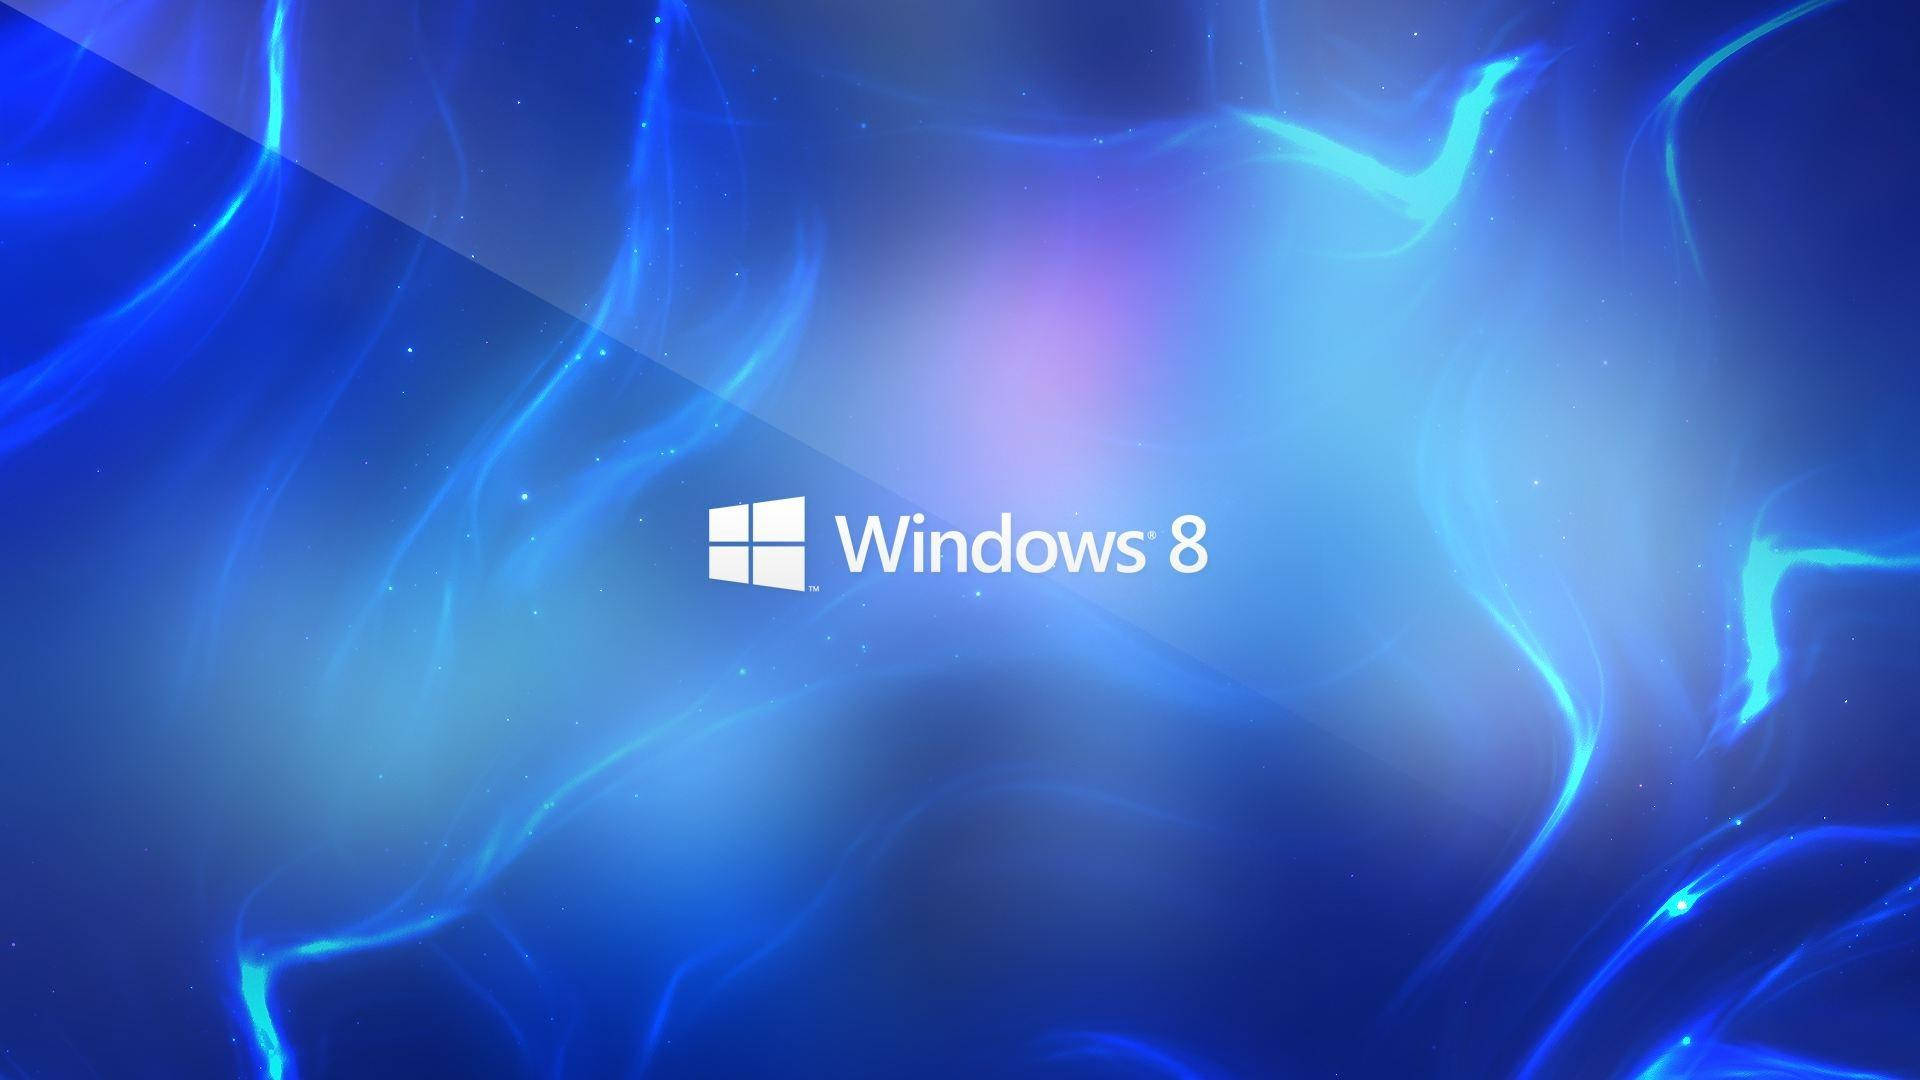 Top 999+ Windows 8 Wallpaper Full HD, 4K✓Free to Use